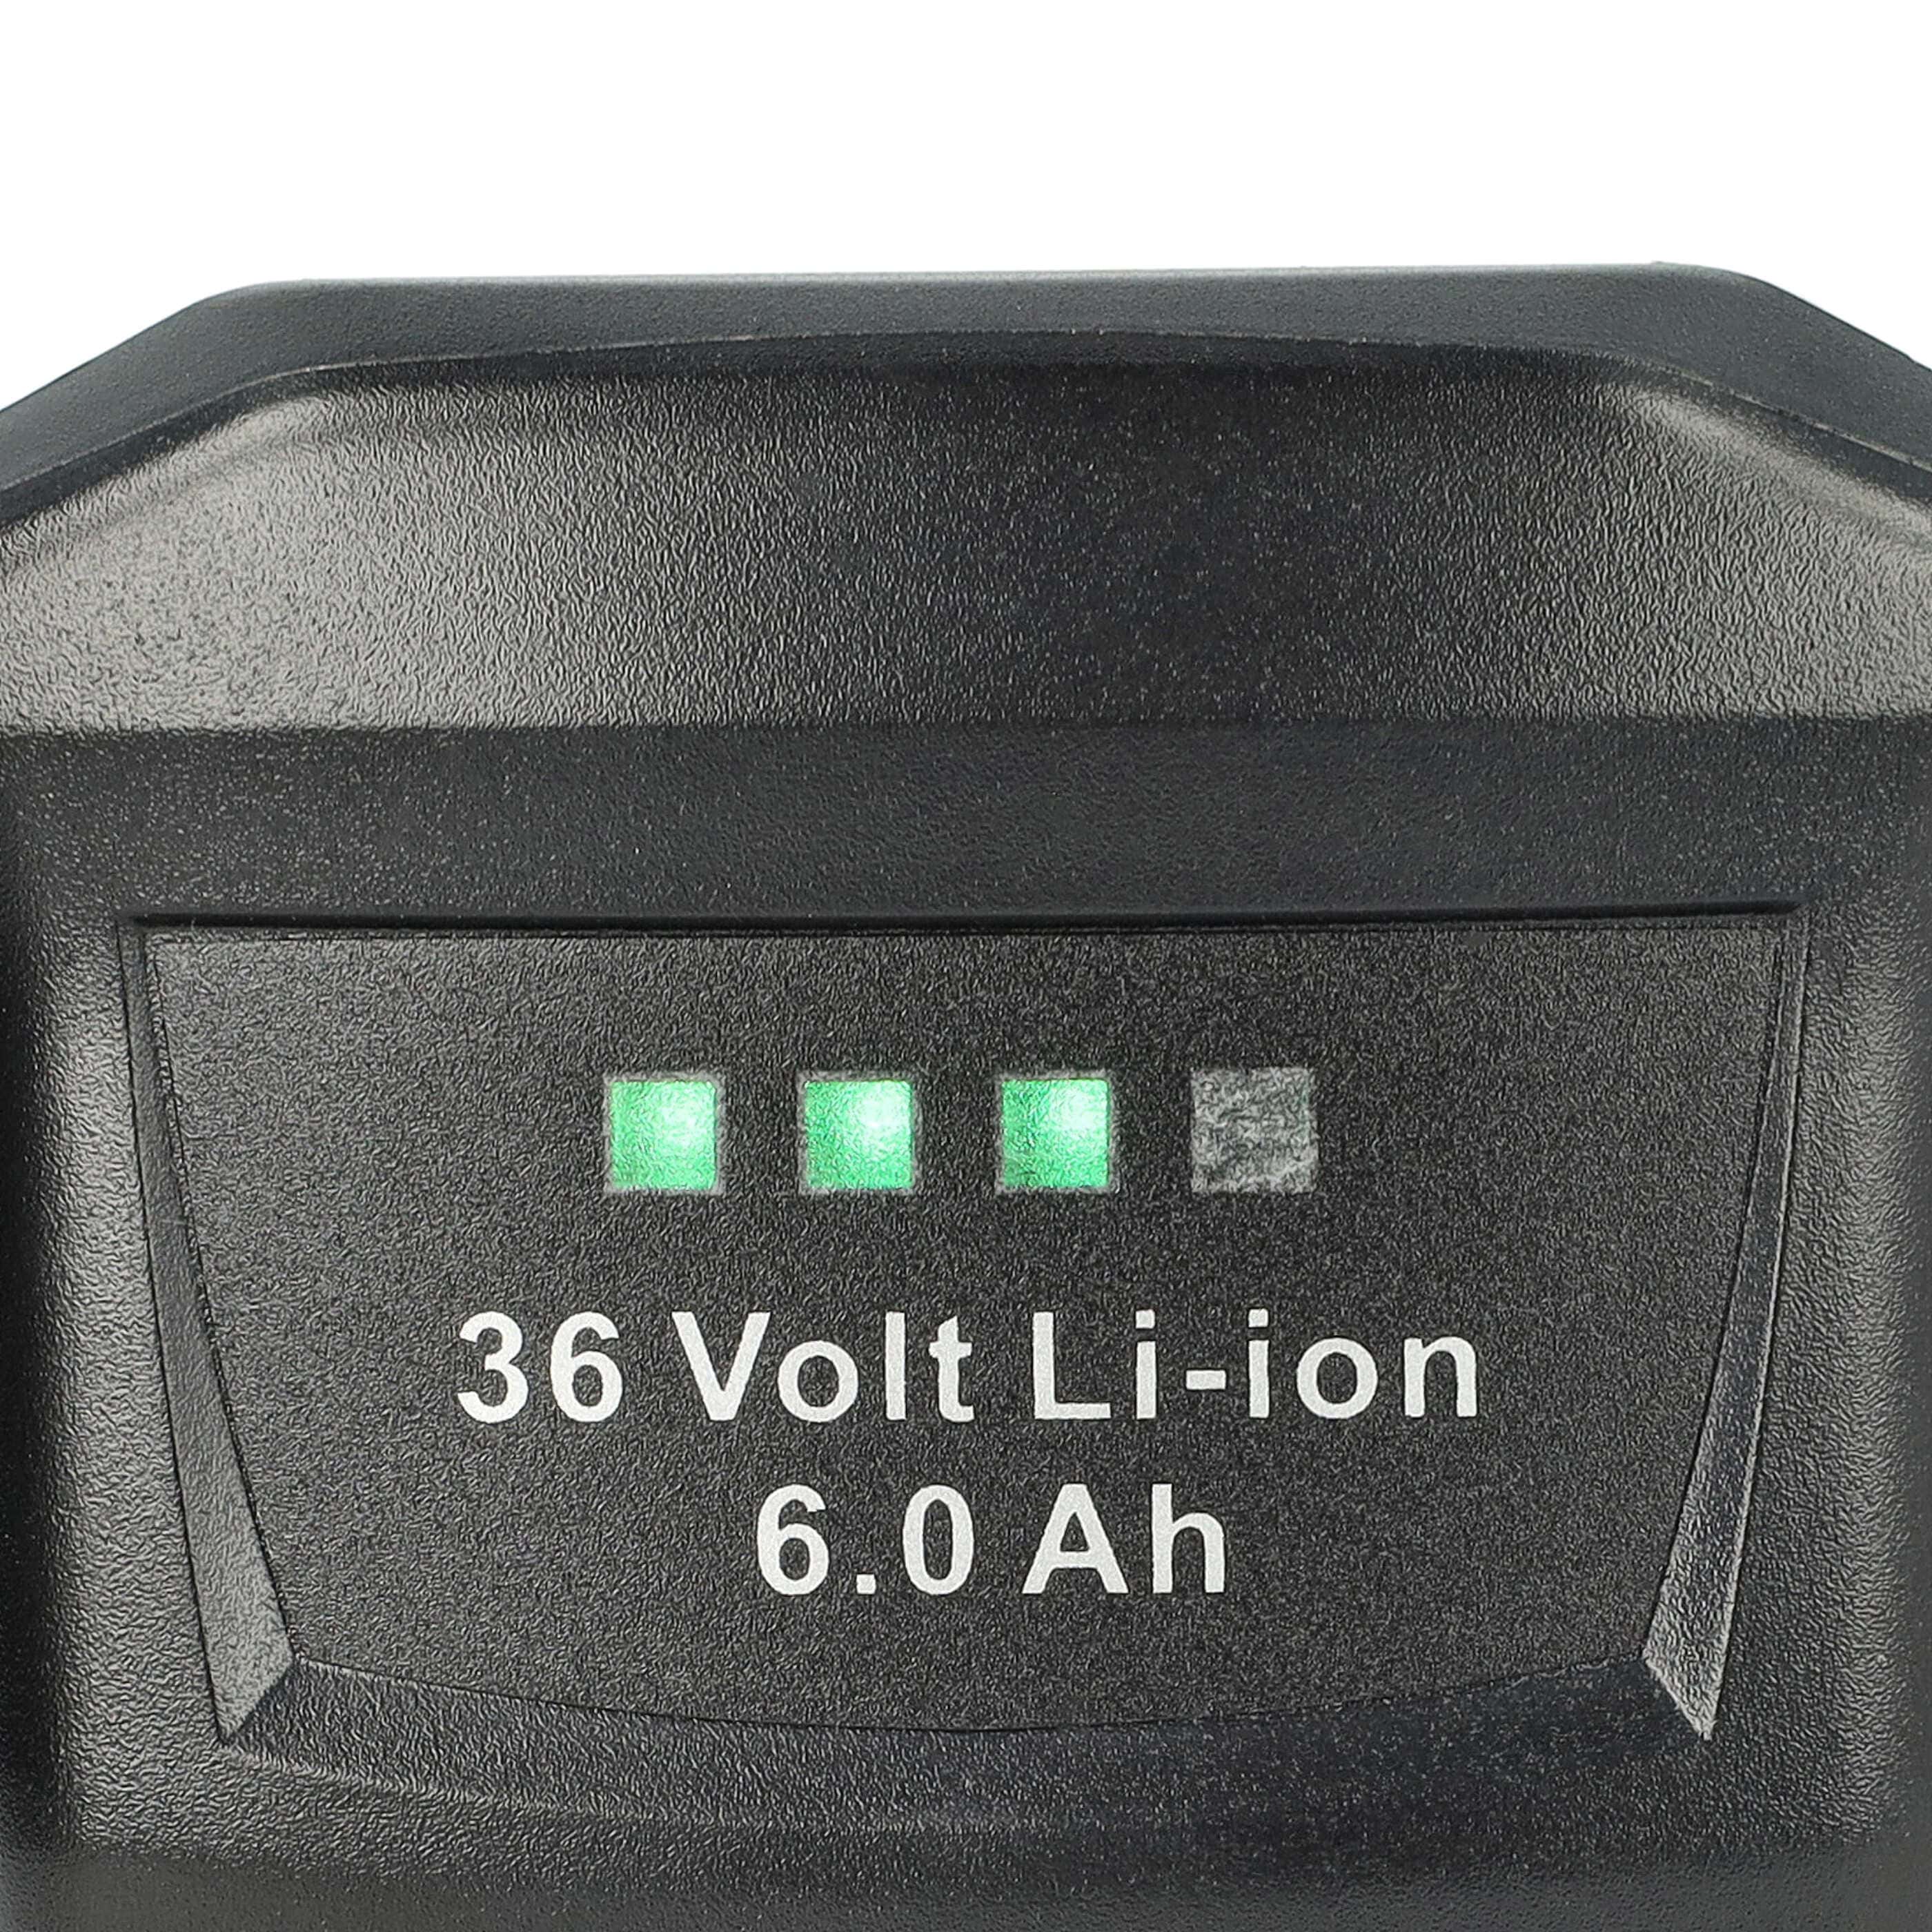 Akumulator do elektronarzędzi zamiennik Hilti B36, B36V, 2203932, 418009 - 6000 mAh, 36 V, Li-Ion